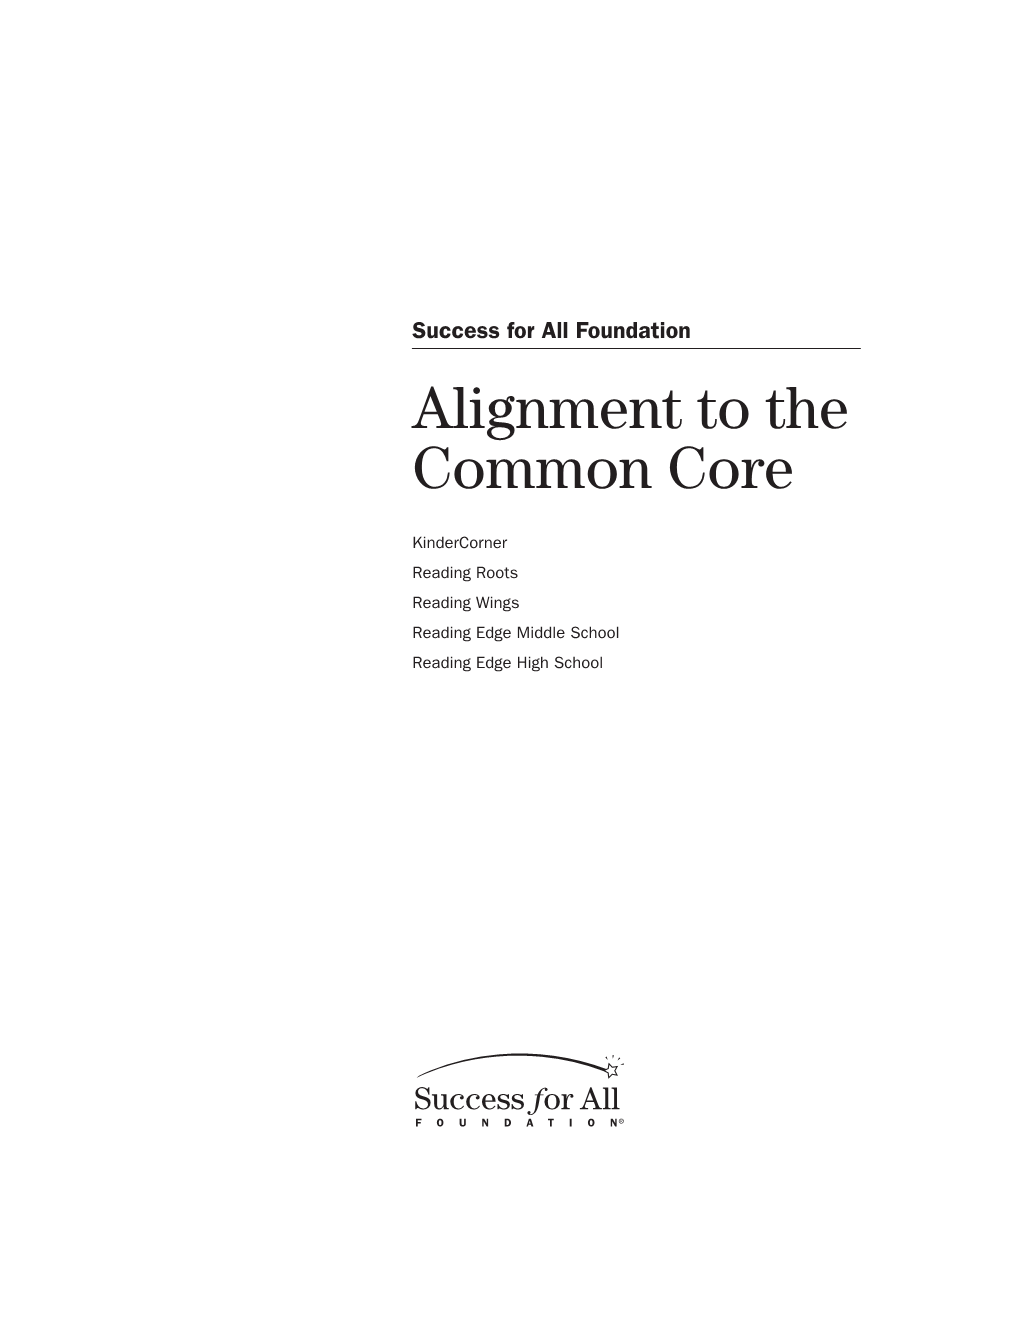 Alignment to the Common Core